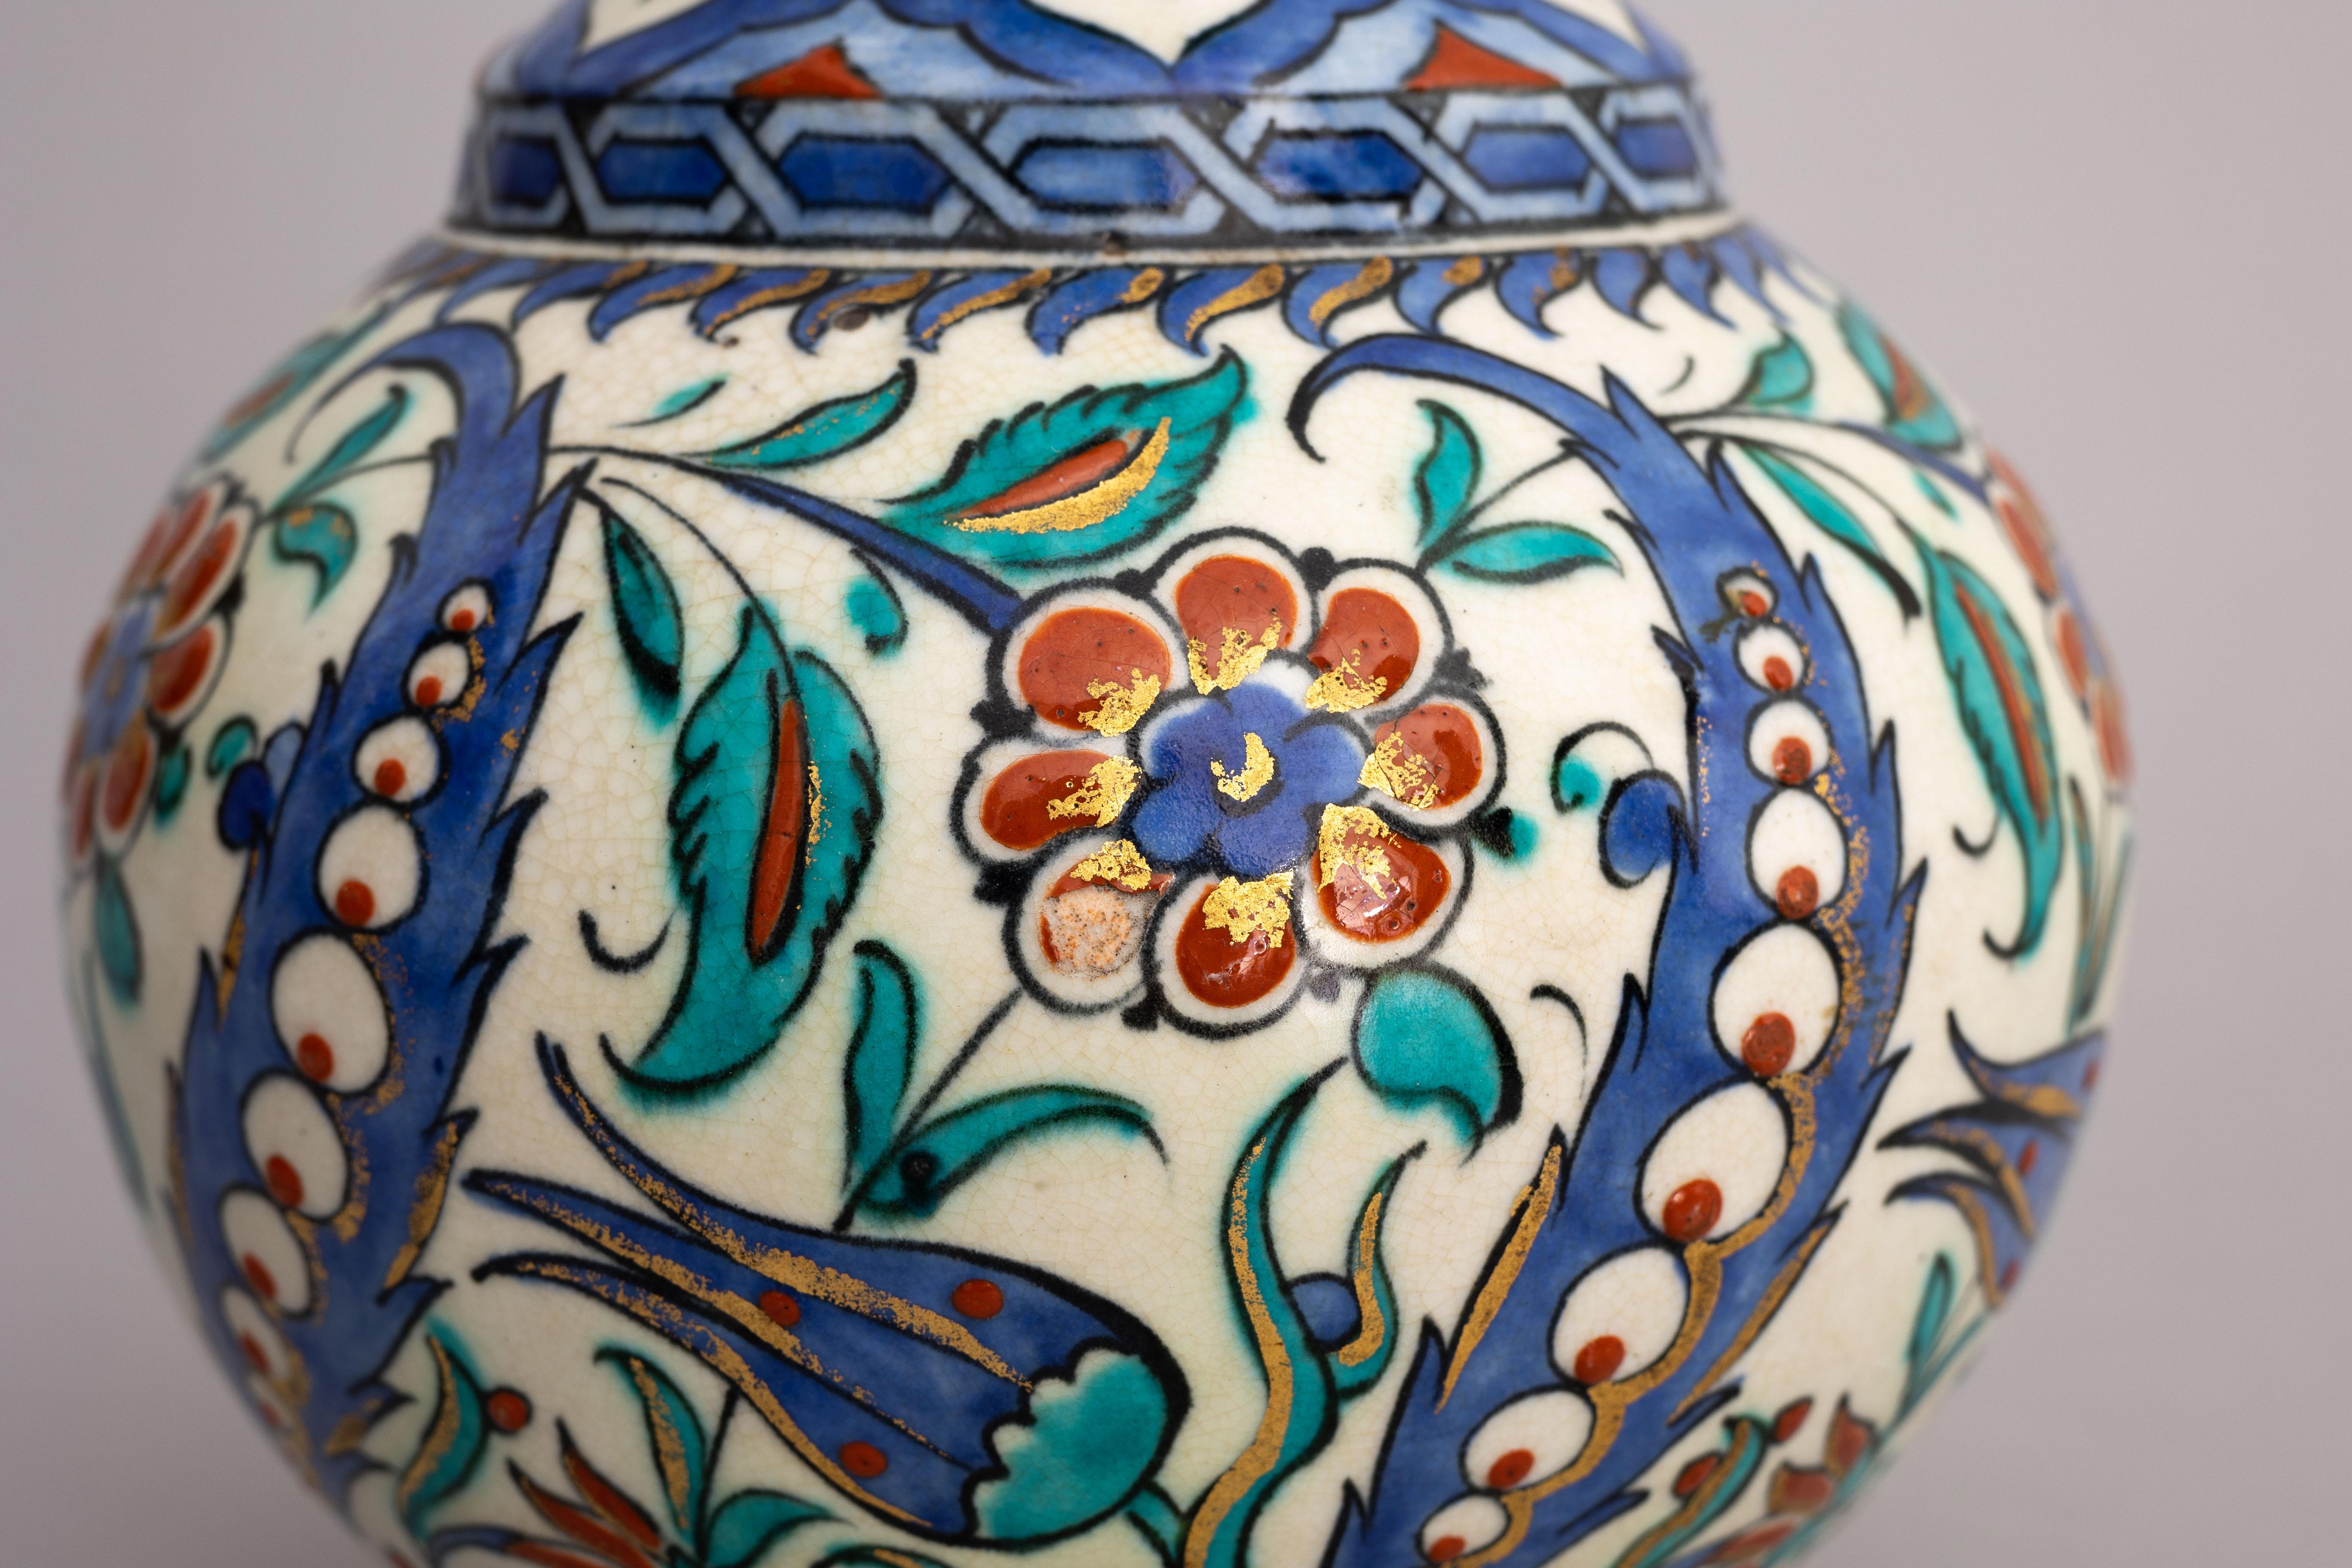 Late 19th-Century Iznik-Style Vase by Samson For Sale 2